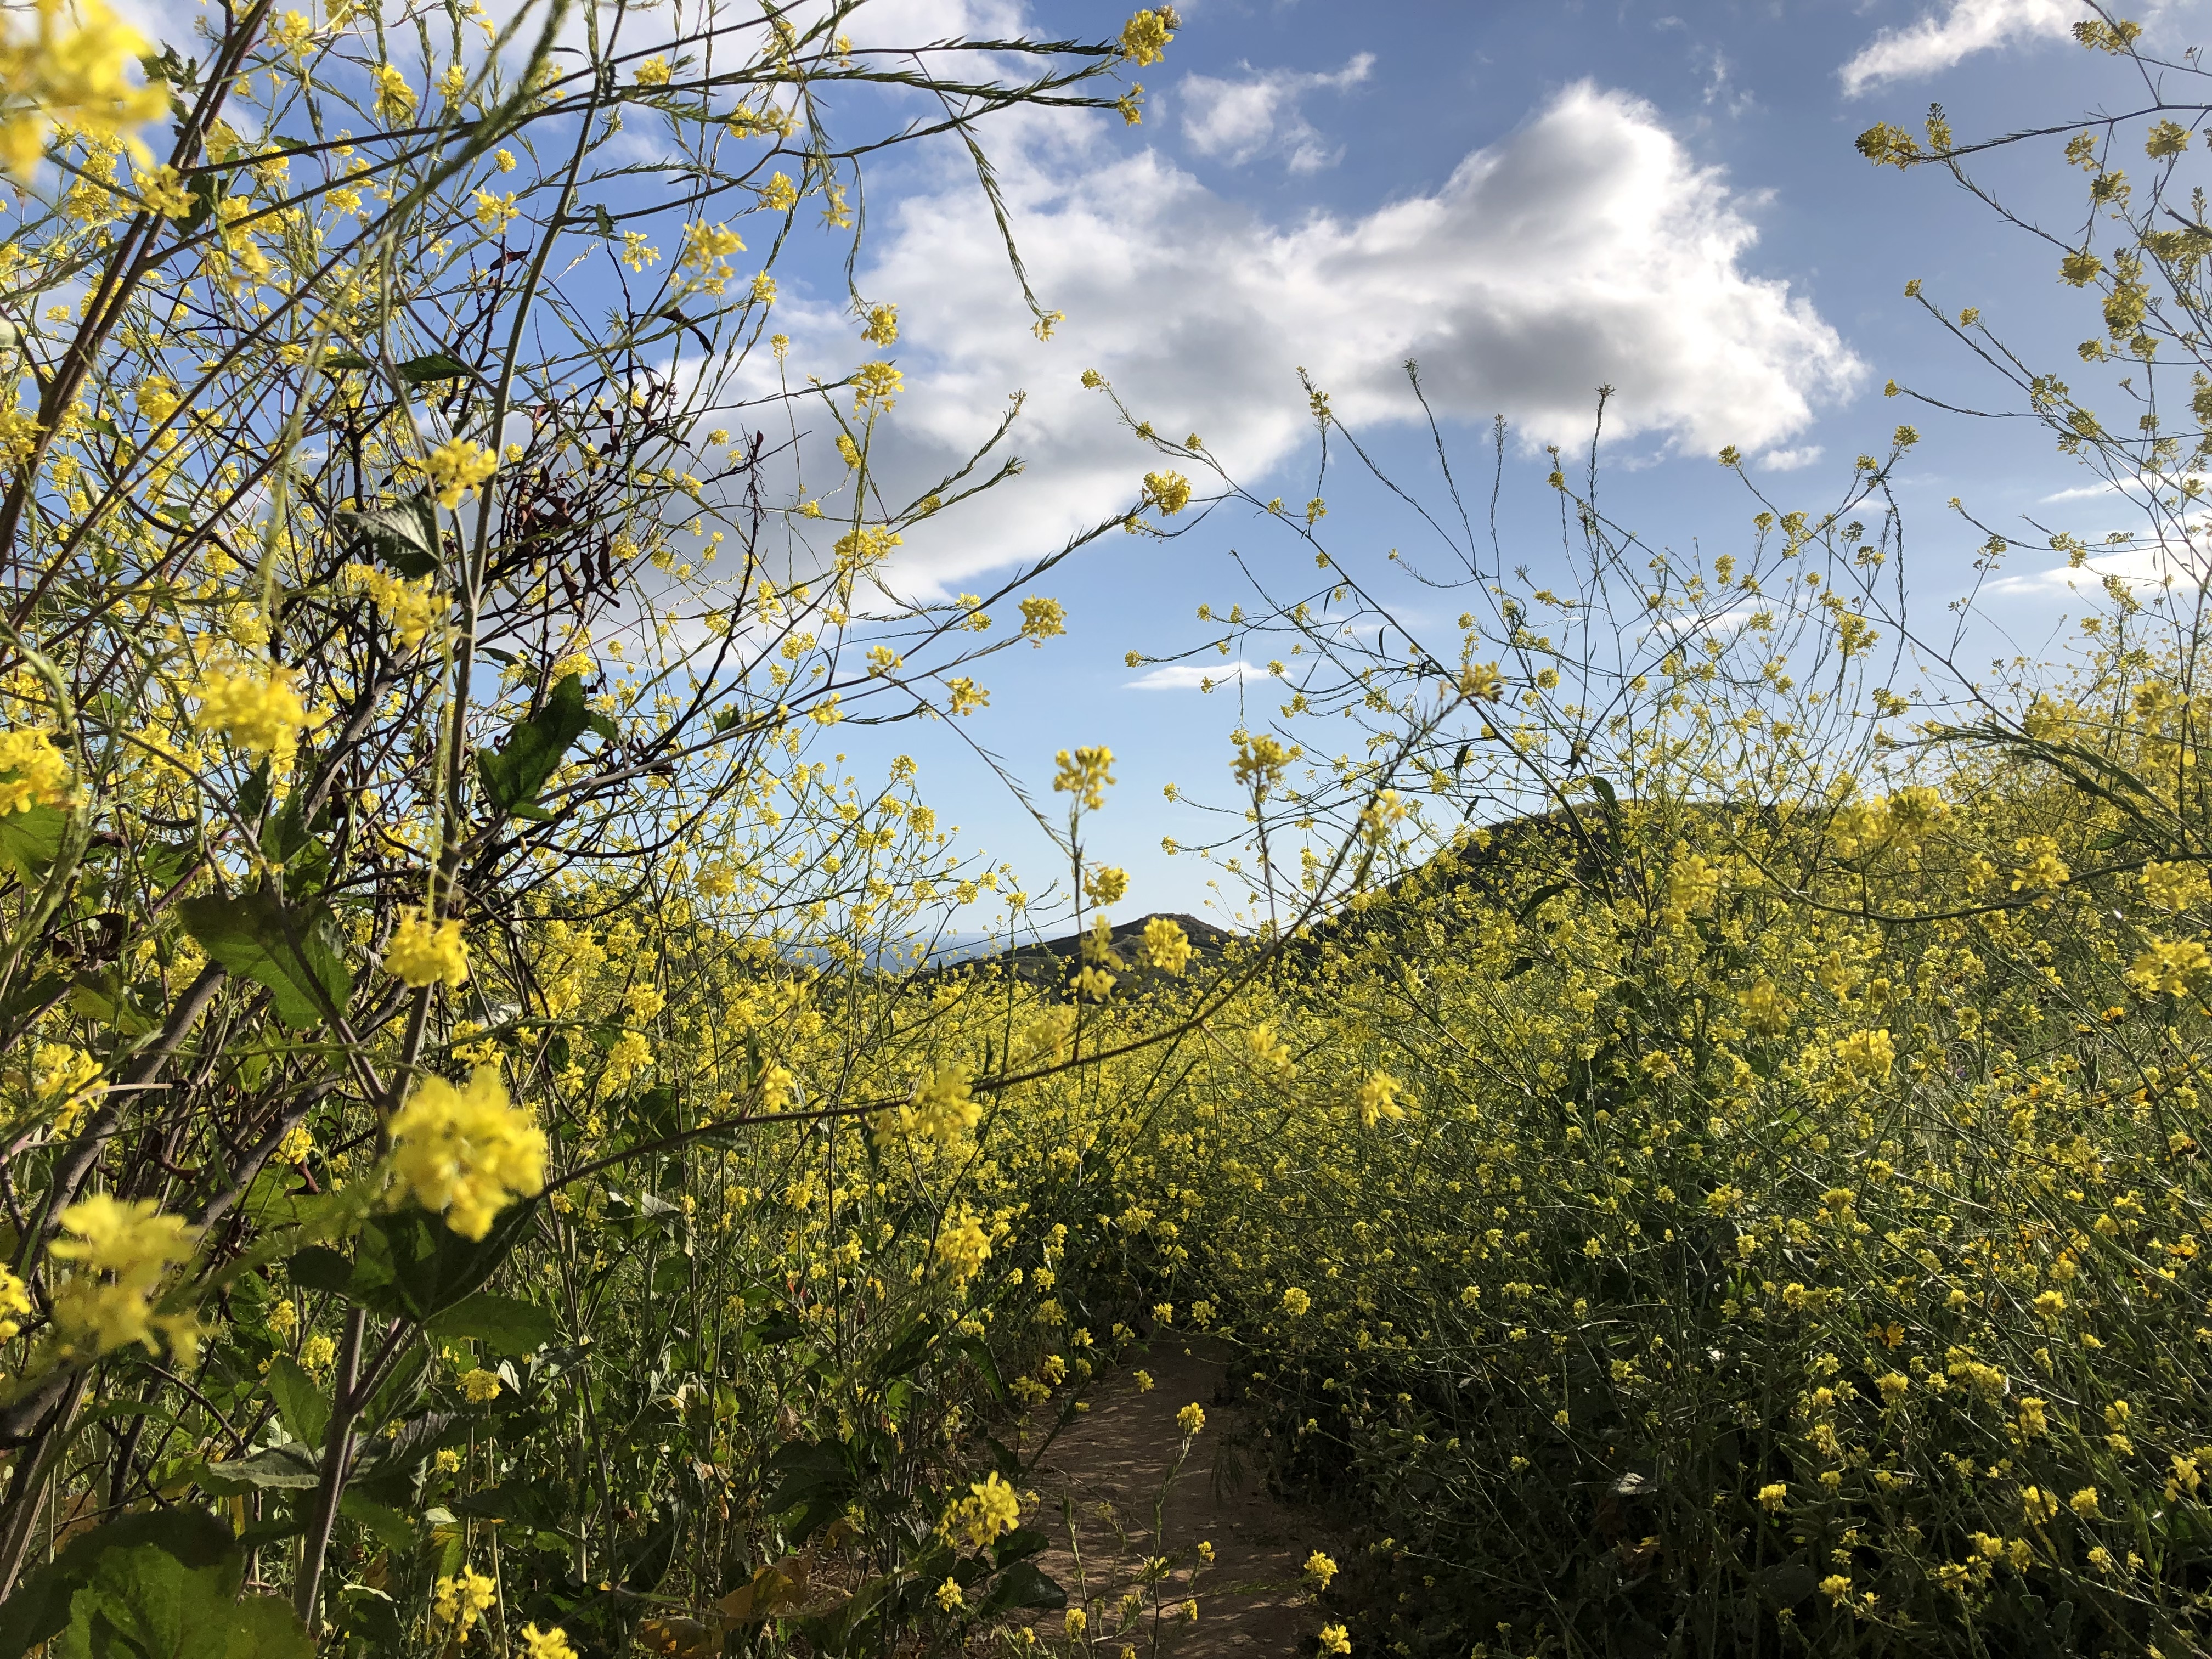 Mustard fields at Solstice